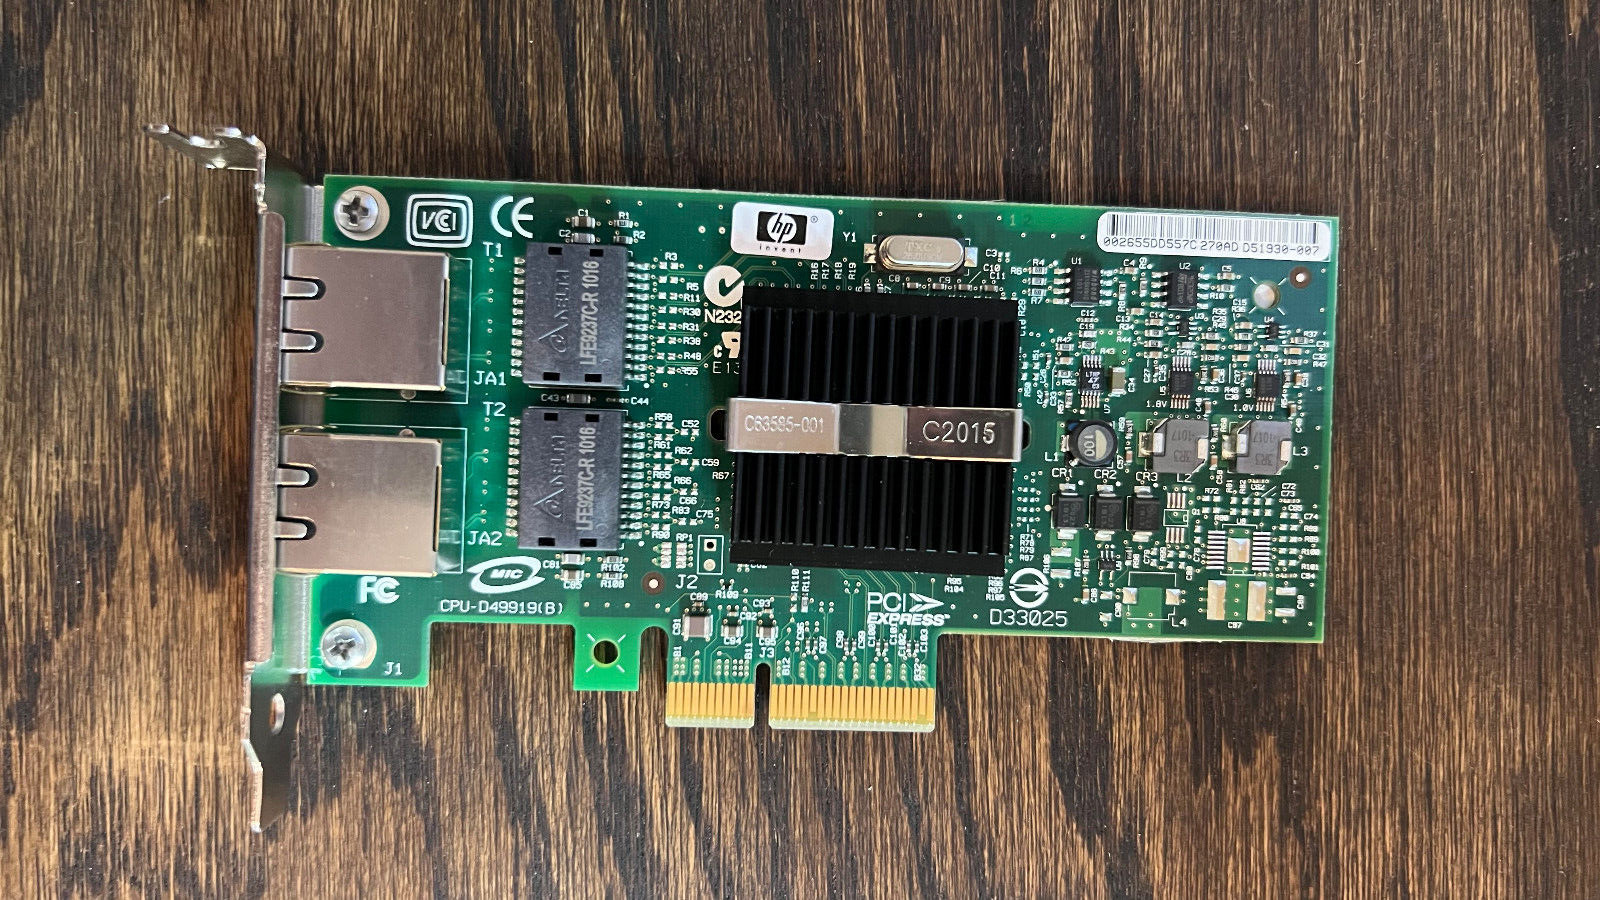 Genuine HP NC360T PCIe Dual Port Gigabit Adapter 412651-001 412646-001